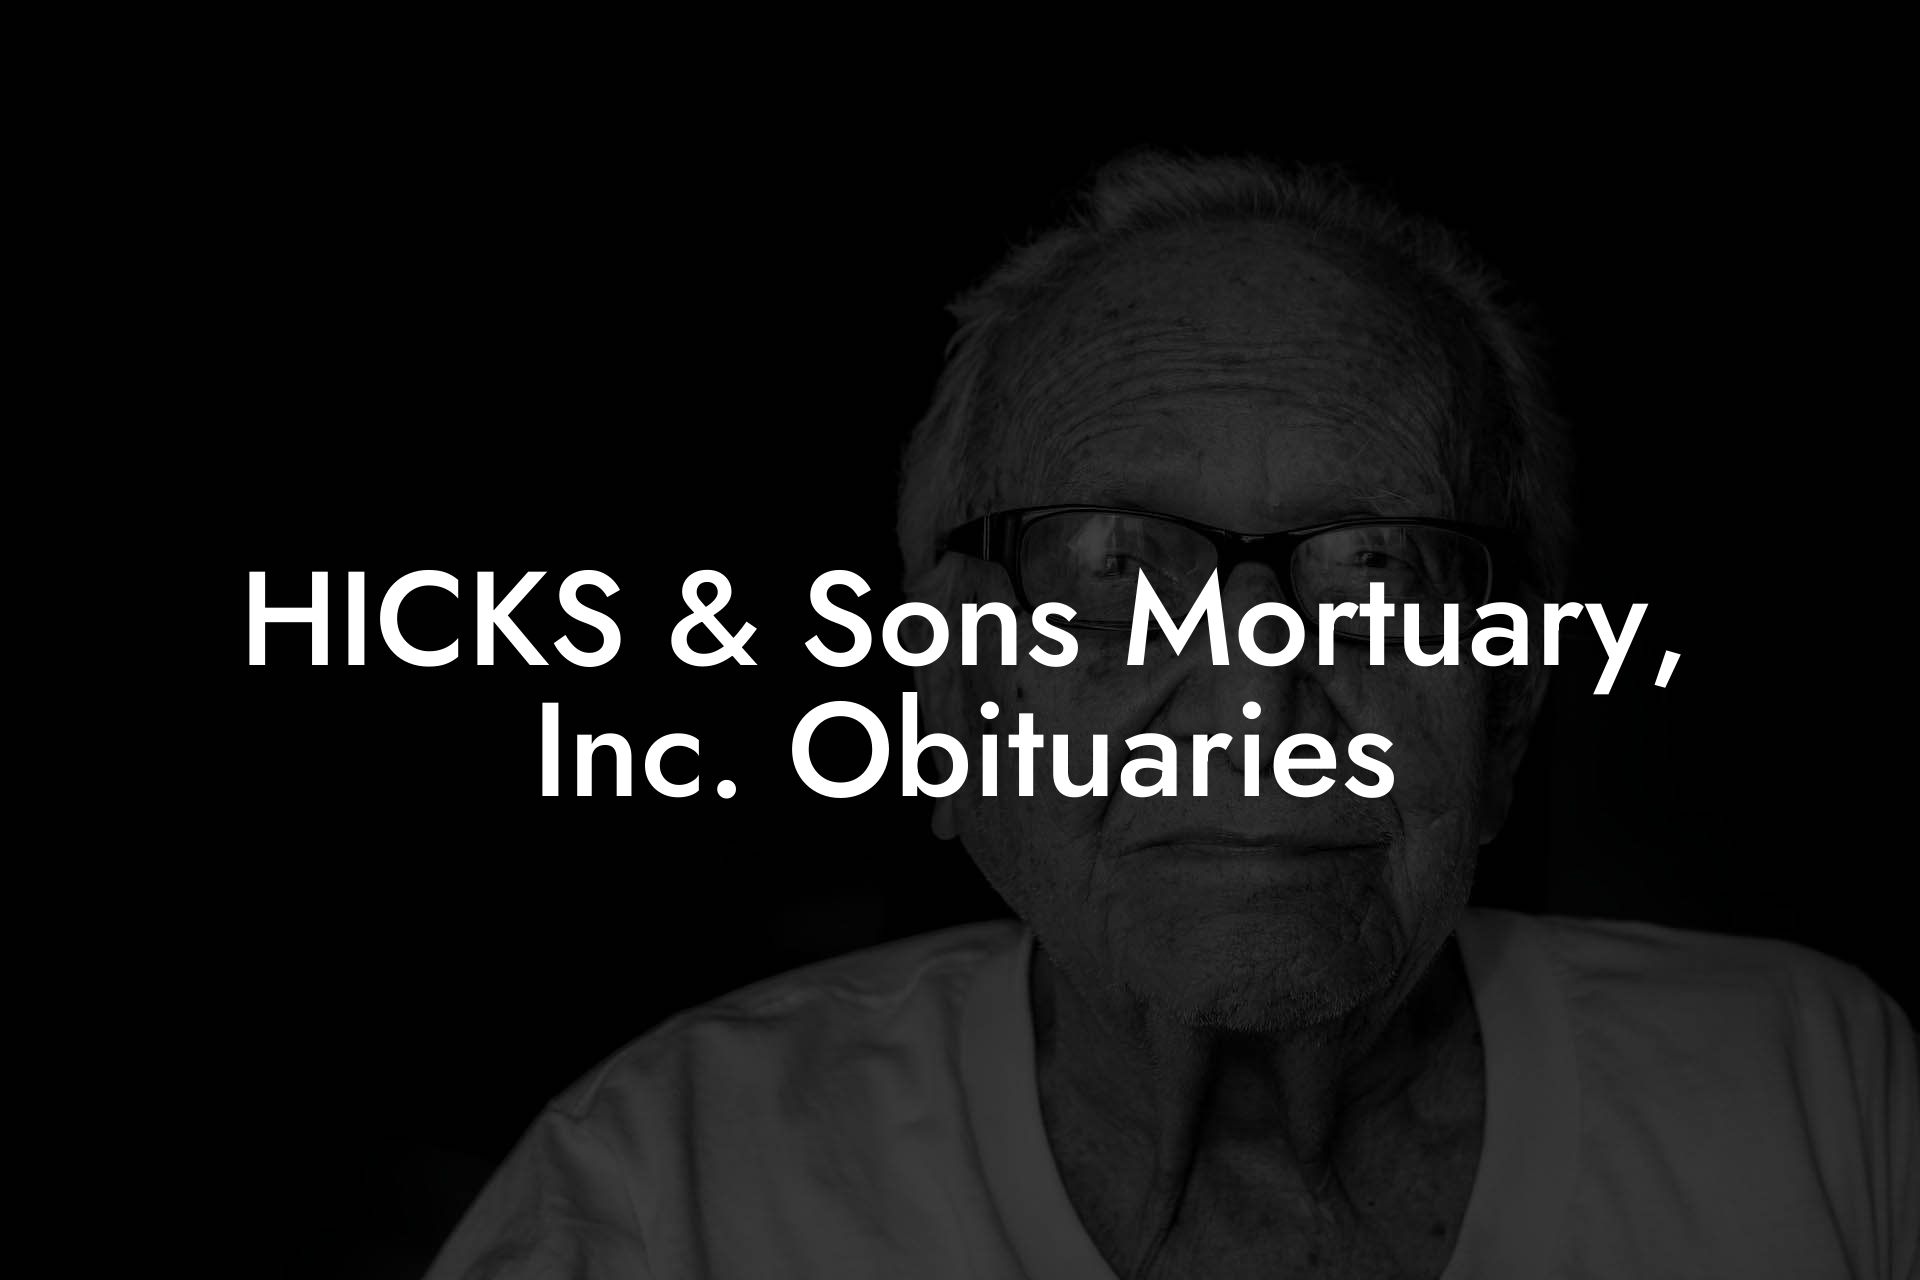 HICKS & Sons Mortuary, Inc. Obituaries